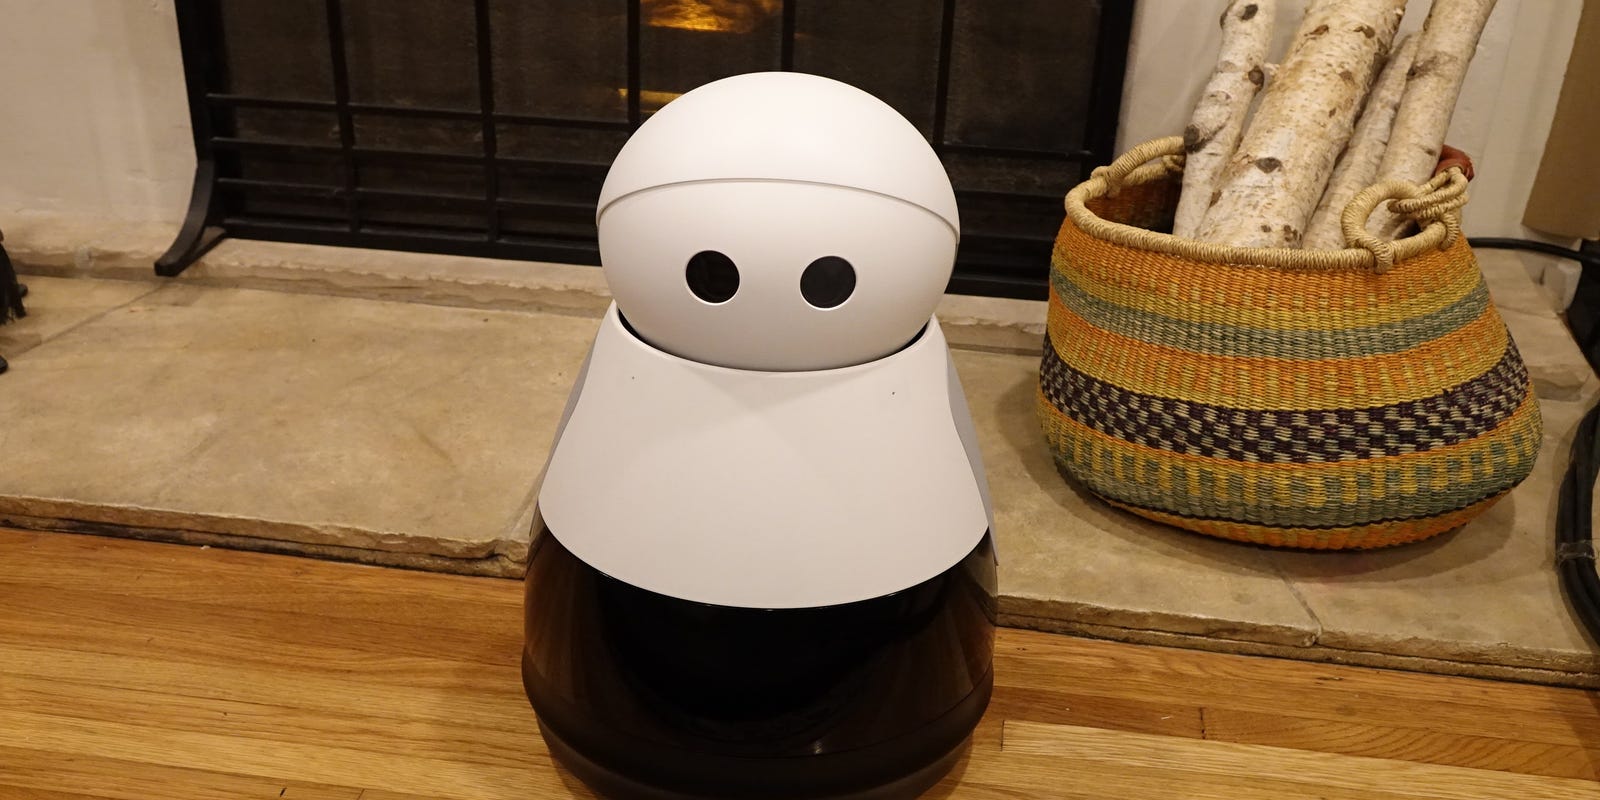 Kuri The Robot A 700 Home Companion Is Terminated